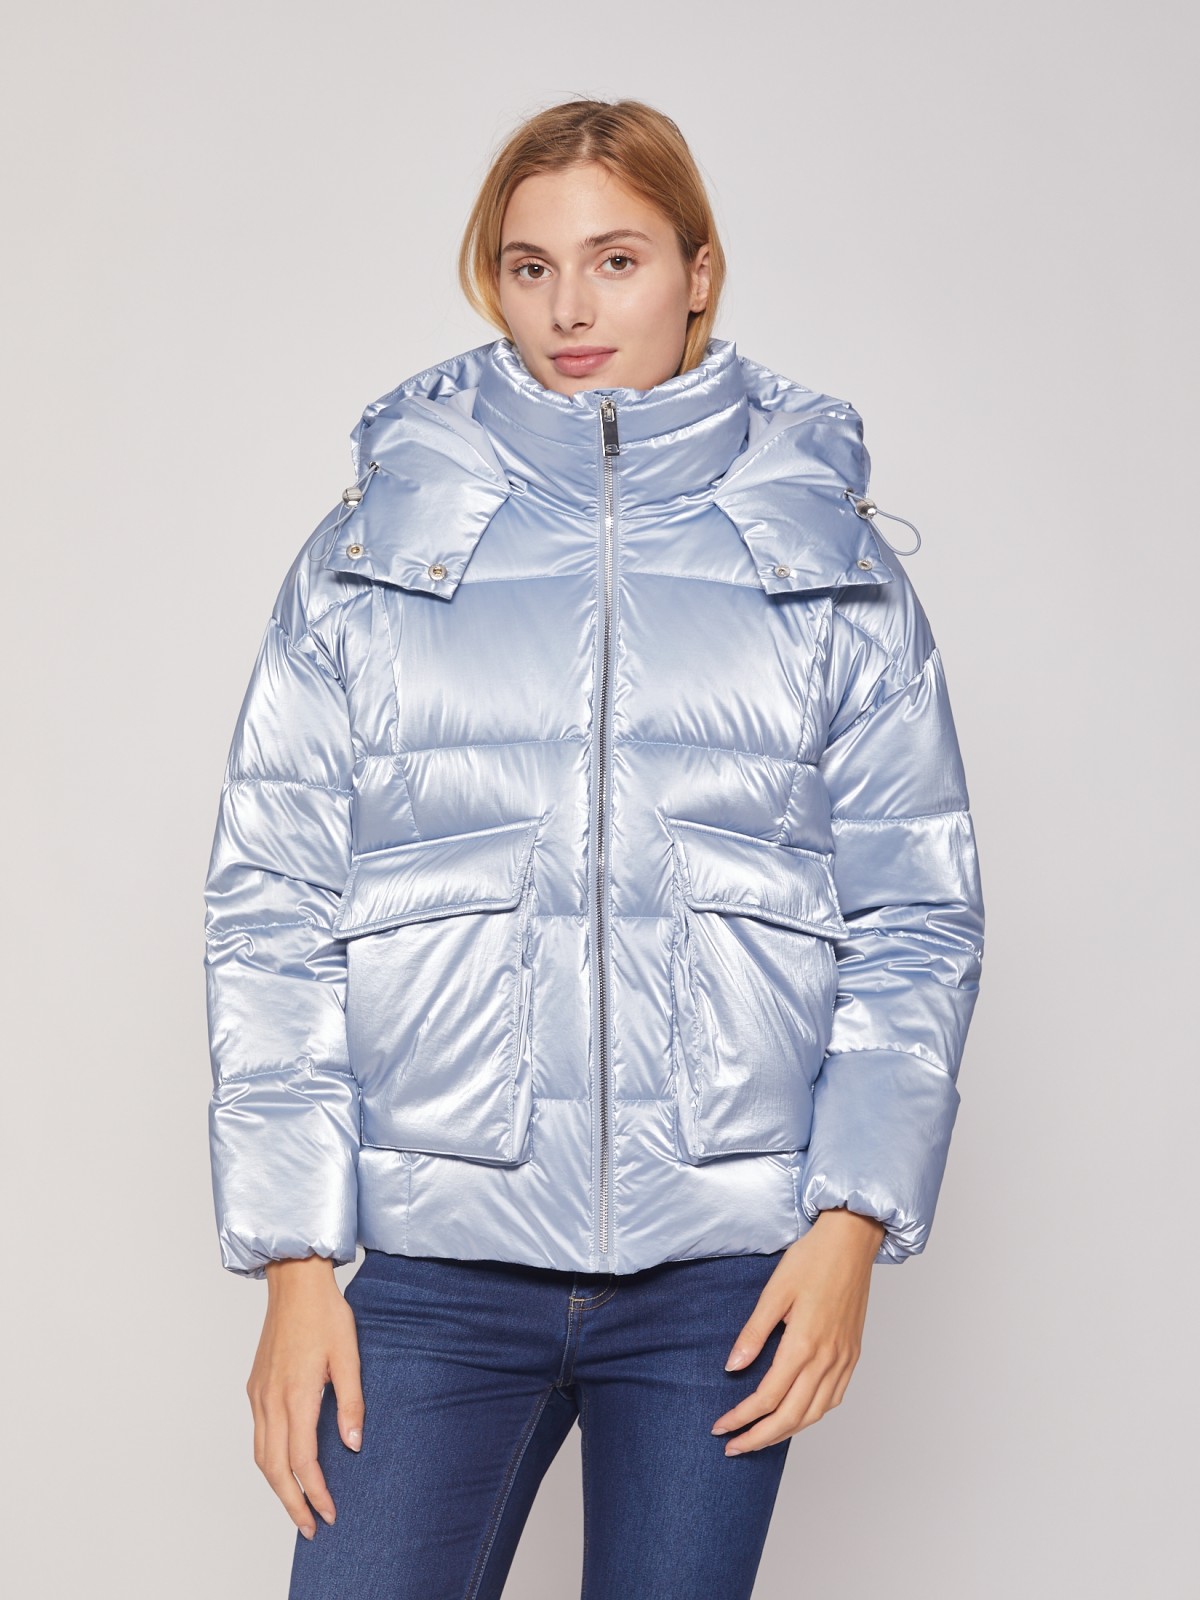 Утеплённая короткая куртка zolla 020425112514, цвет голубой, размер XS - фото 1